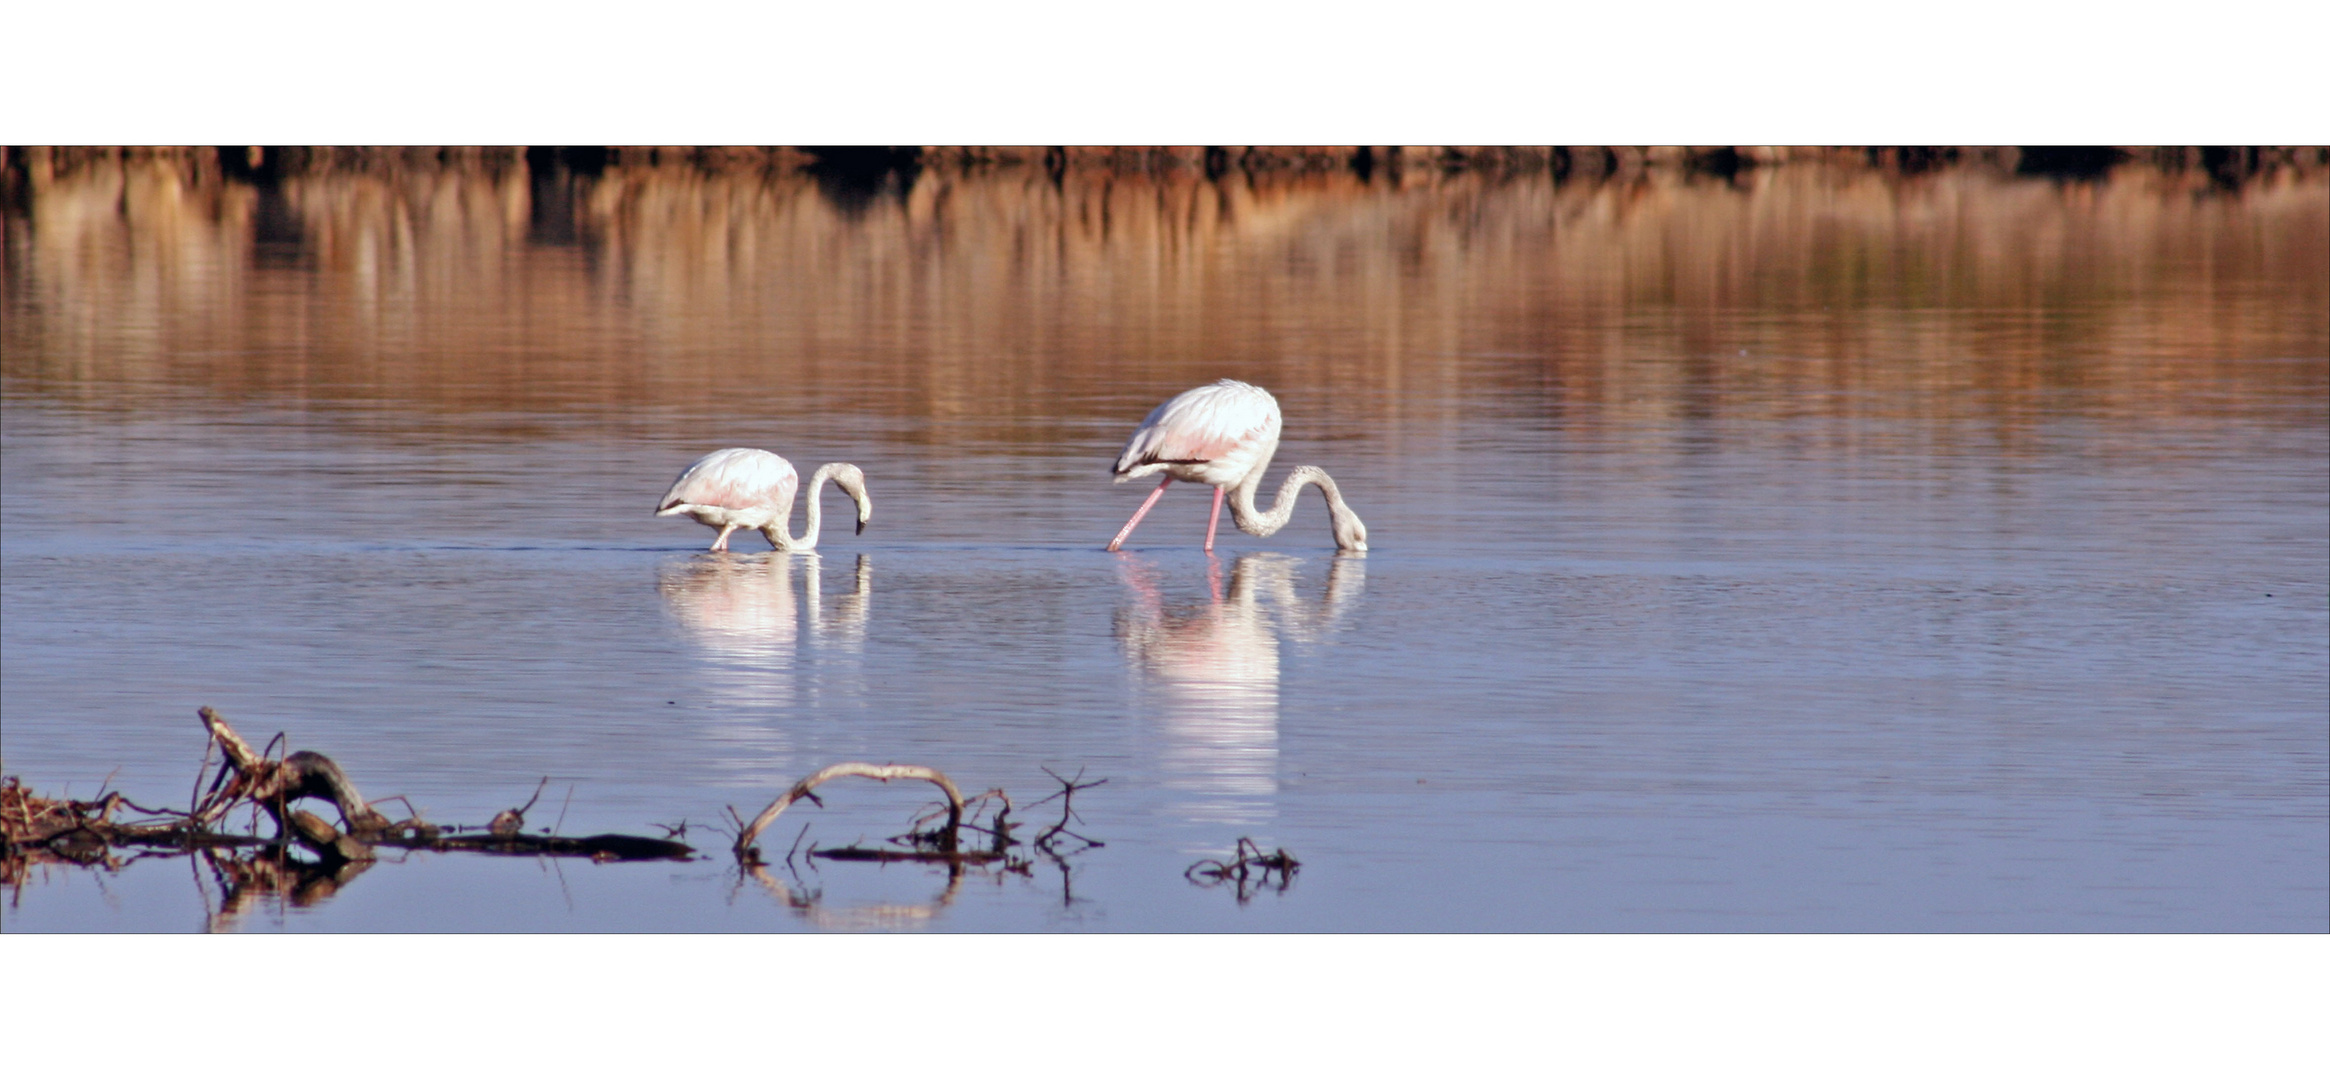 Flamingos in Salzwasserlagune in Sardinien - San Teodoro